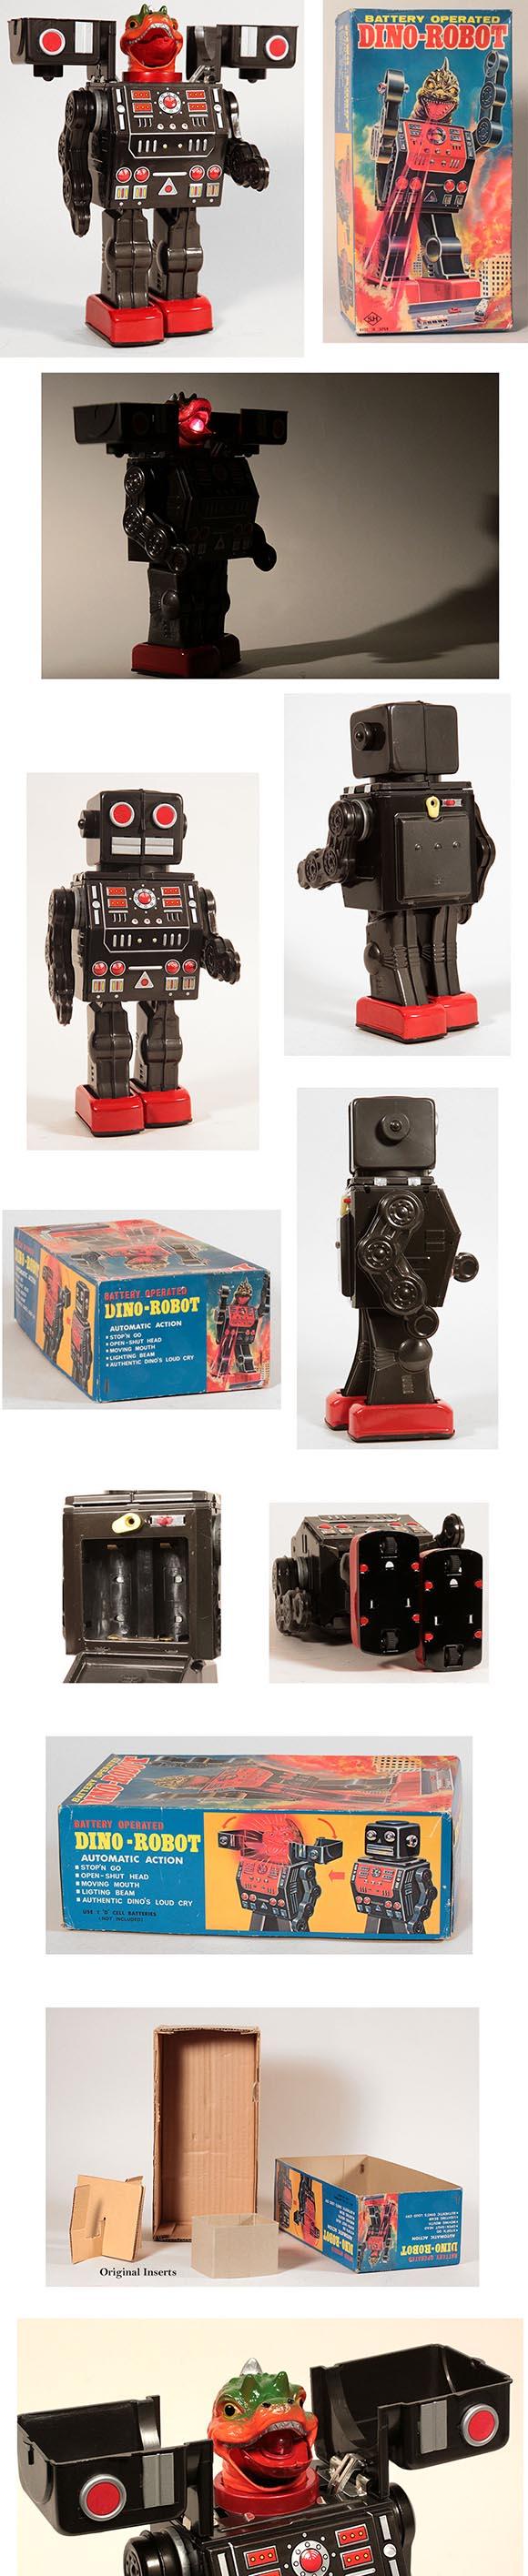 1972 Horikawa, Dino-Robot in Original Box w/Inserts